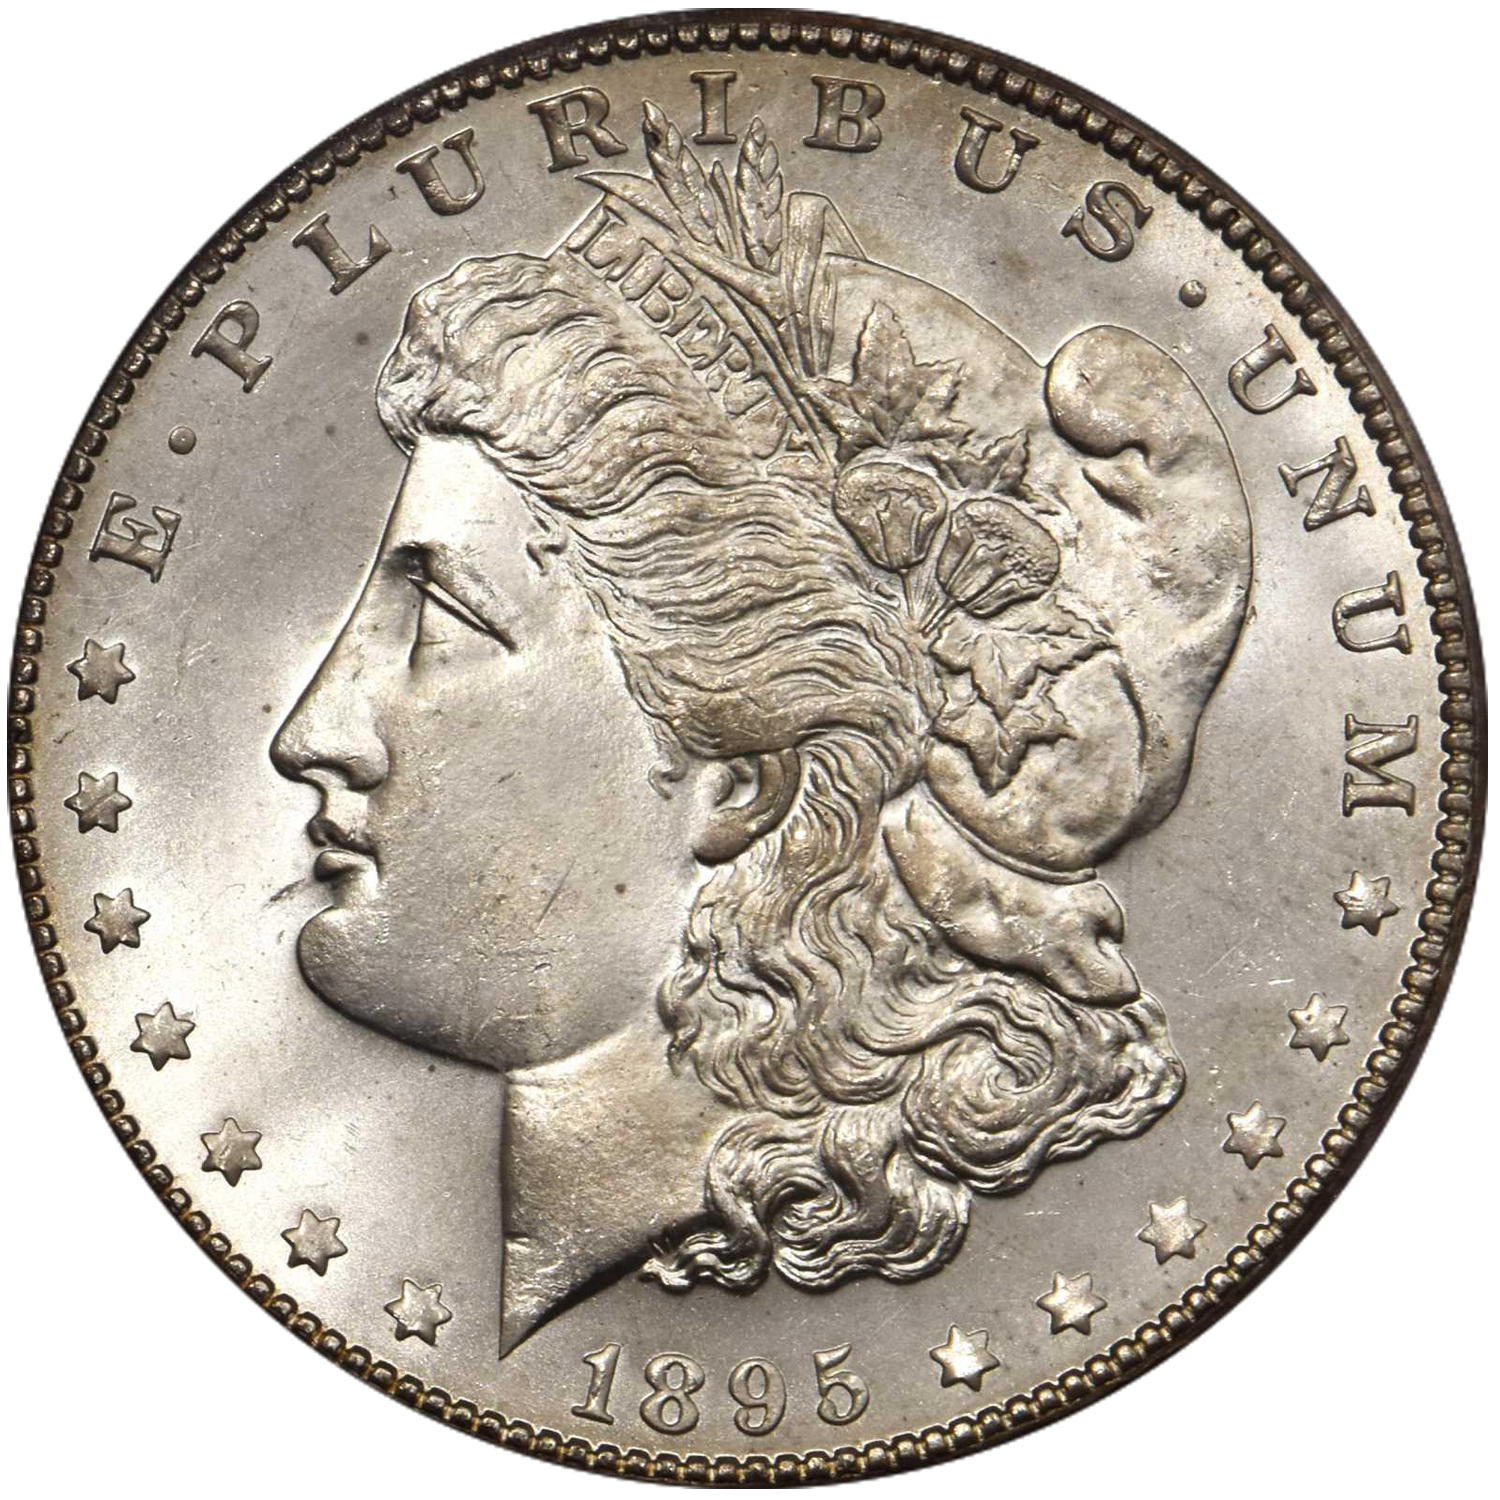 1895 new orleans mint proof morgan silver dollar value